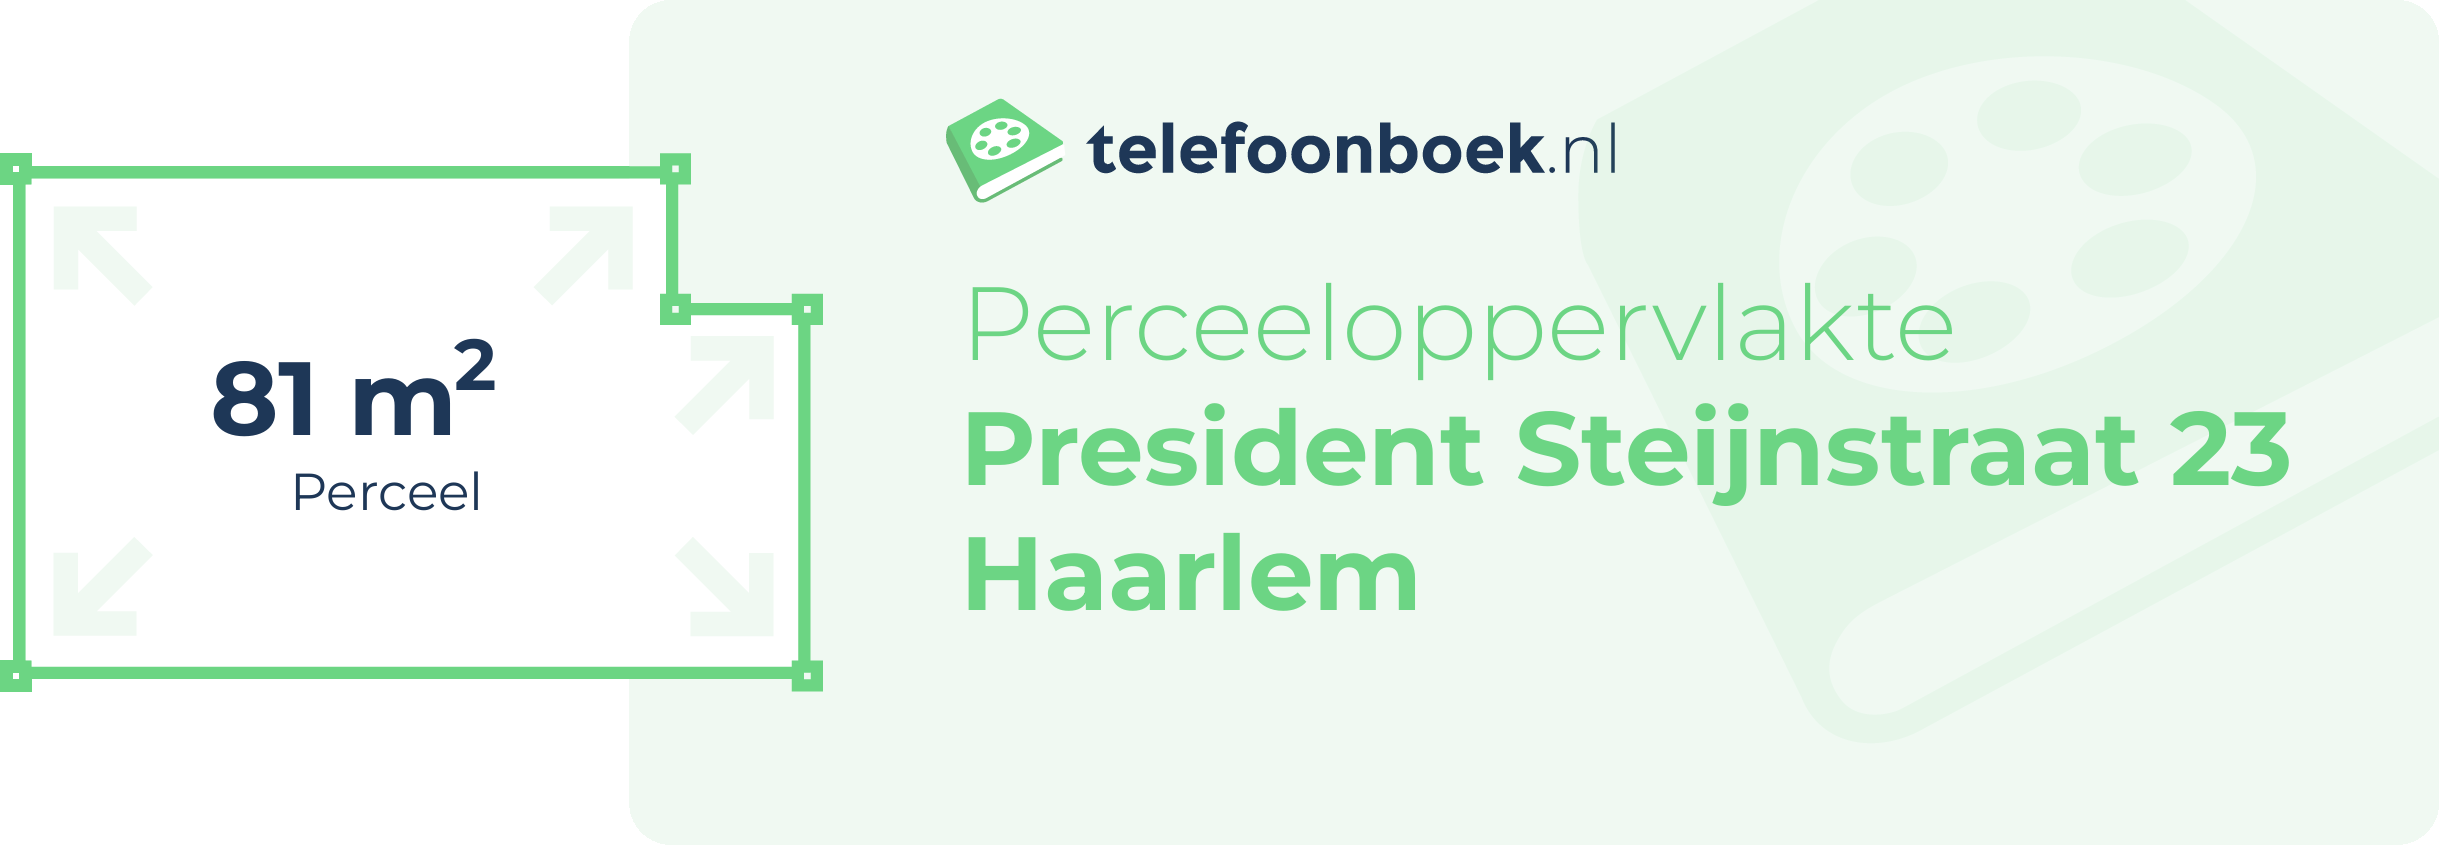 Perceeloppervlakte President Steijnstraat 23 Haarlem